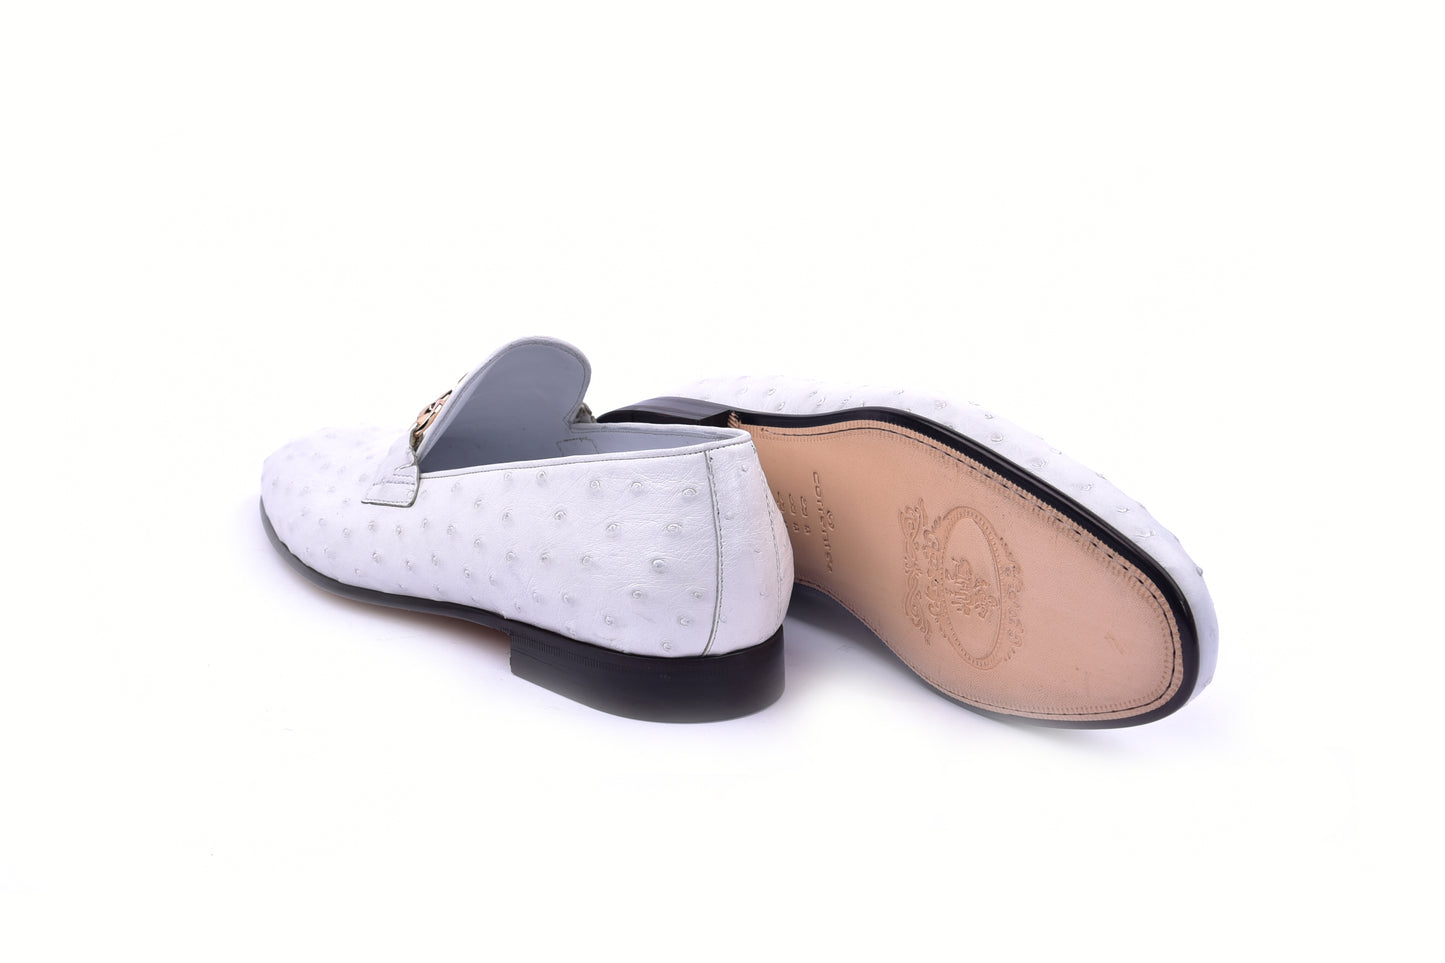 C02205-5405 Genuine Ostrich buckle loafer- White